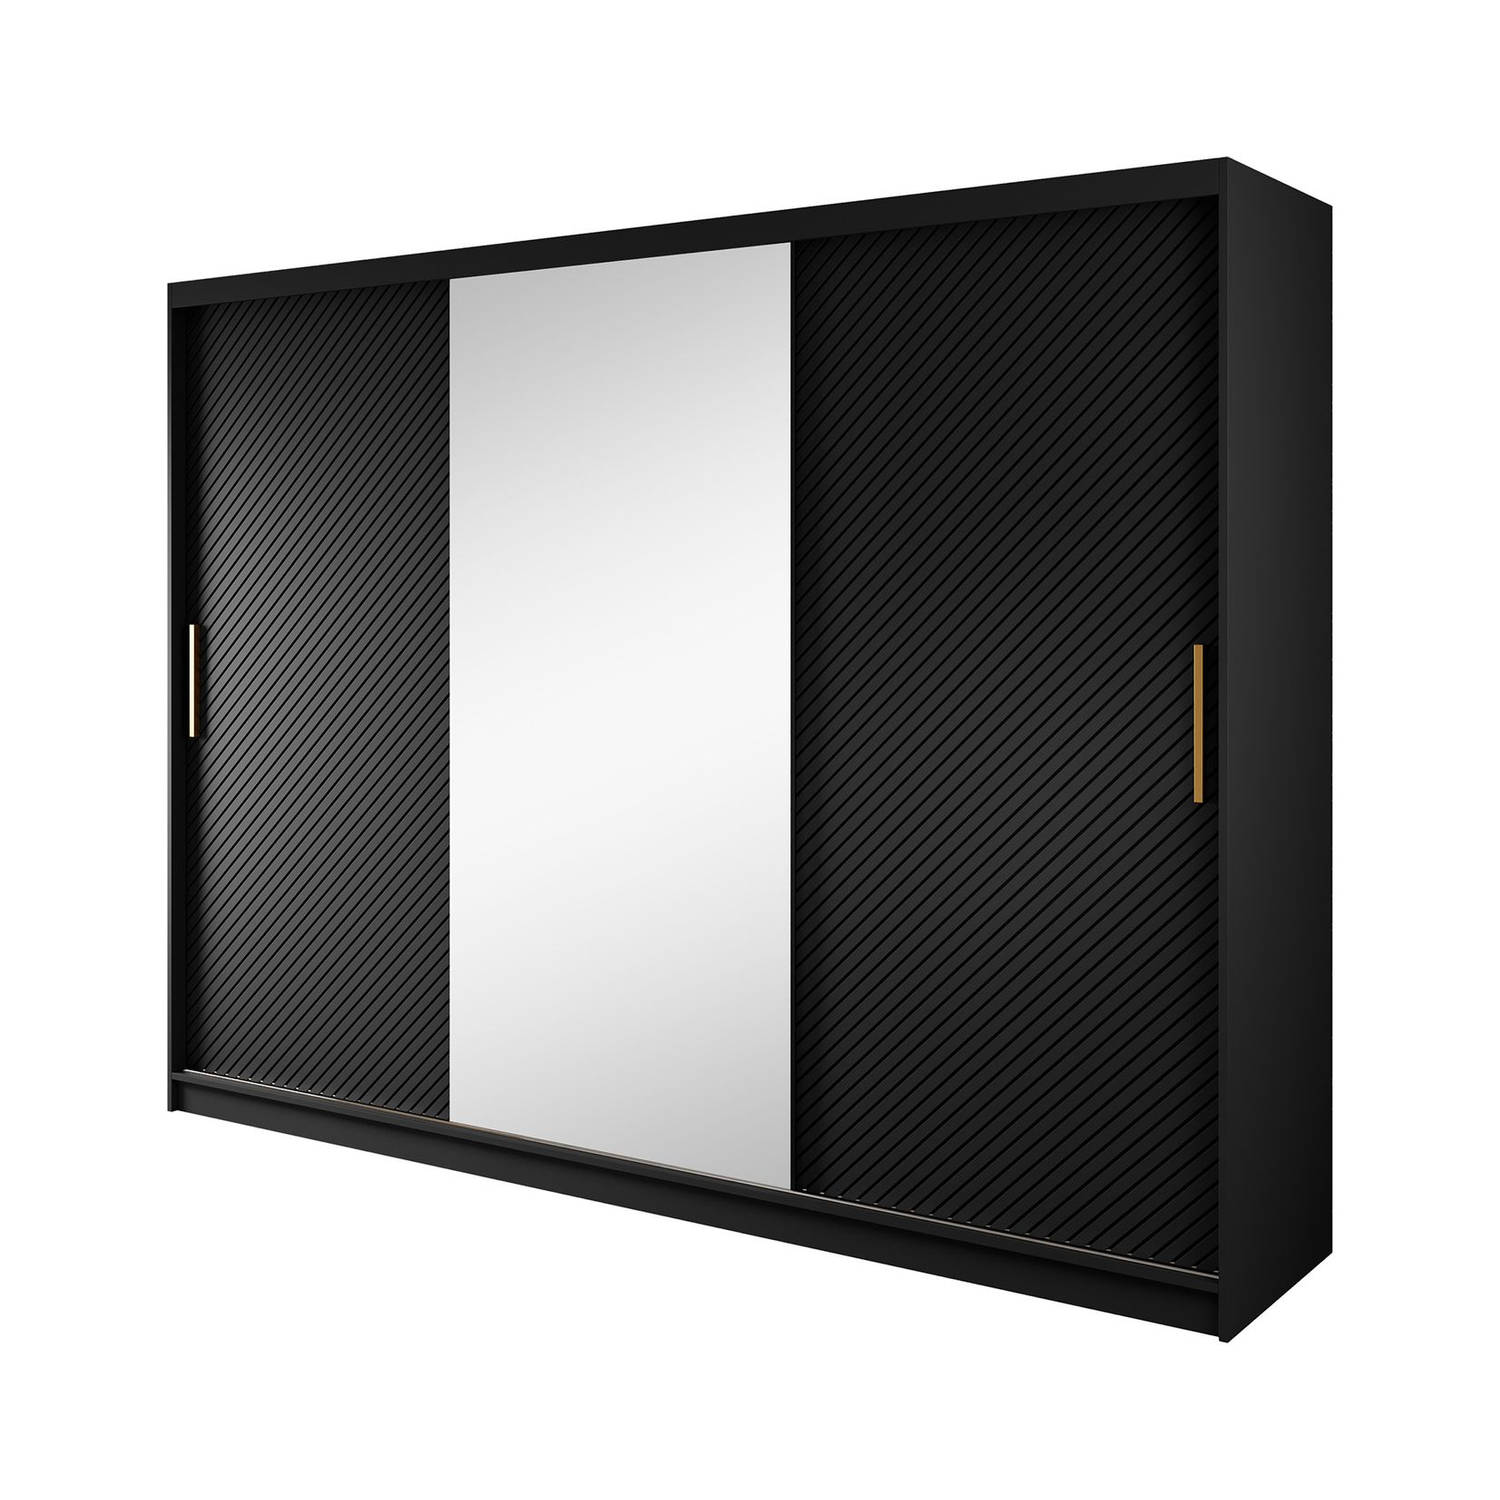 Meubella - Kledingkast Resort - Mat zwart - 250 cm - Met spiegel